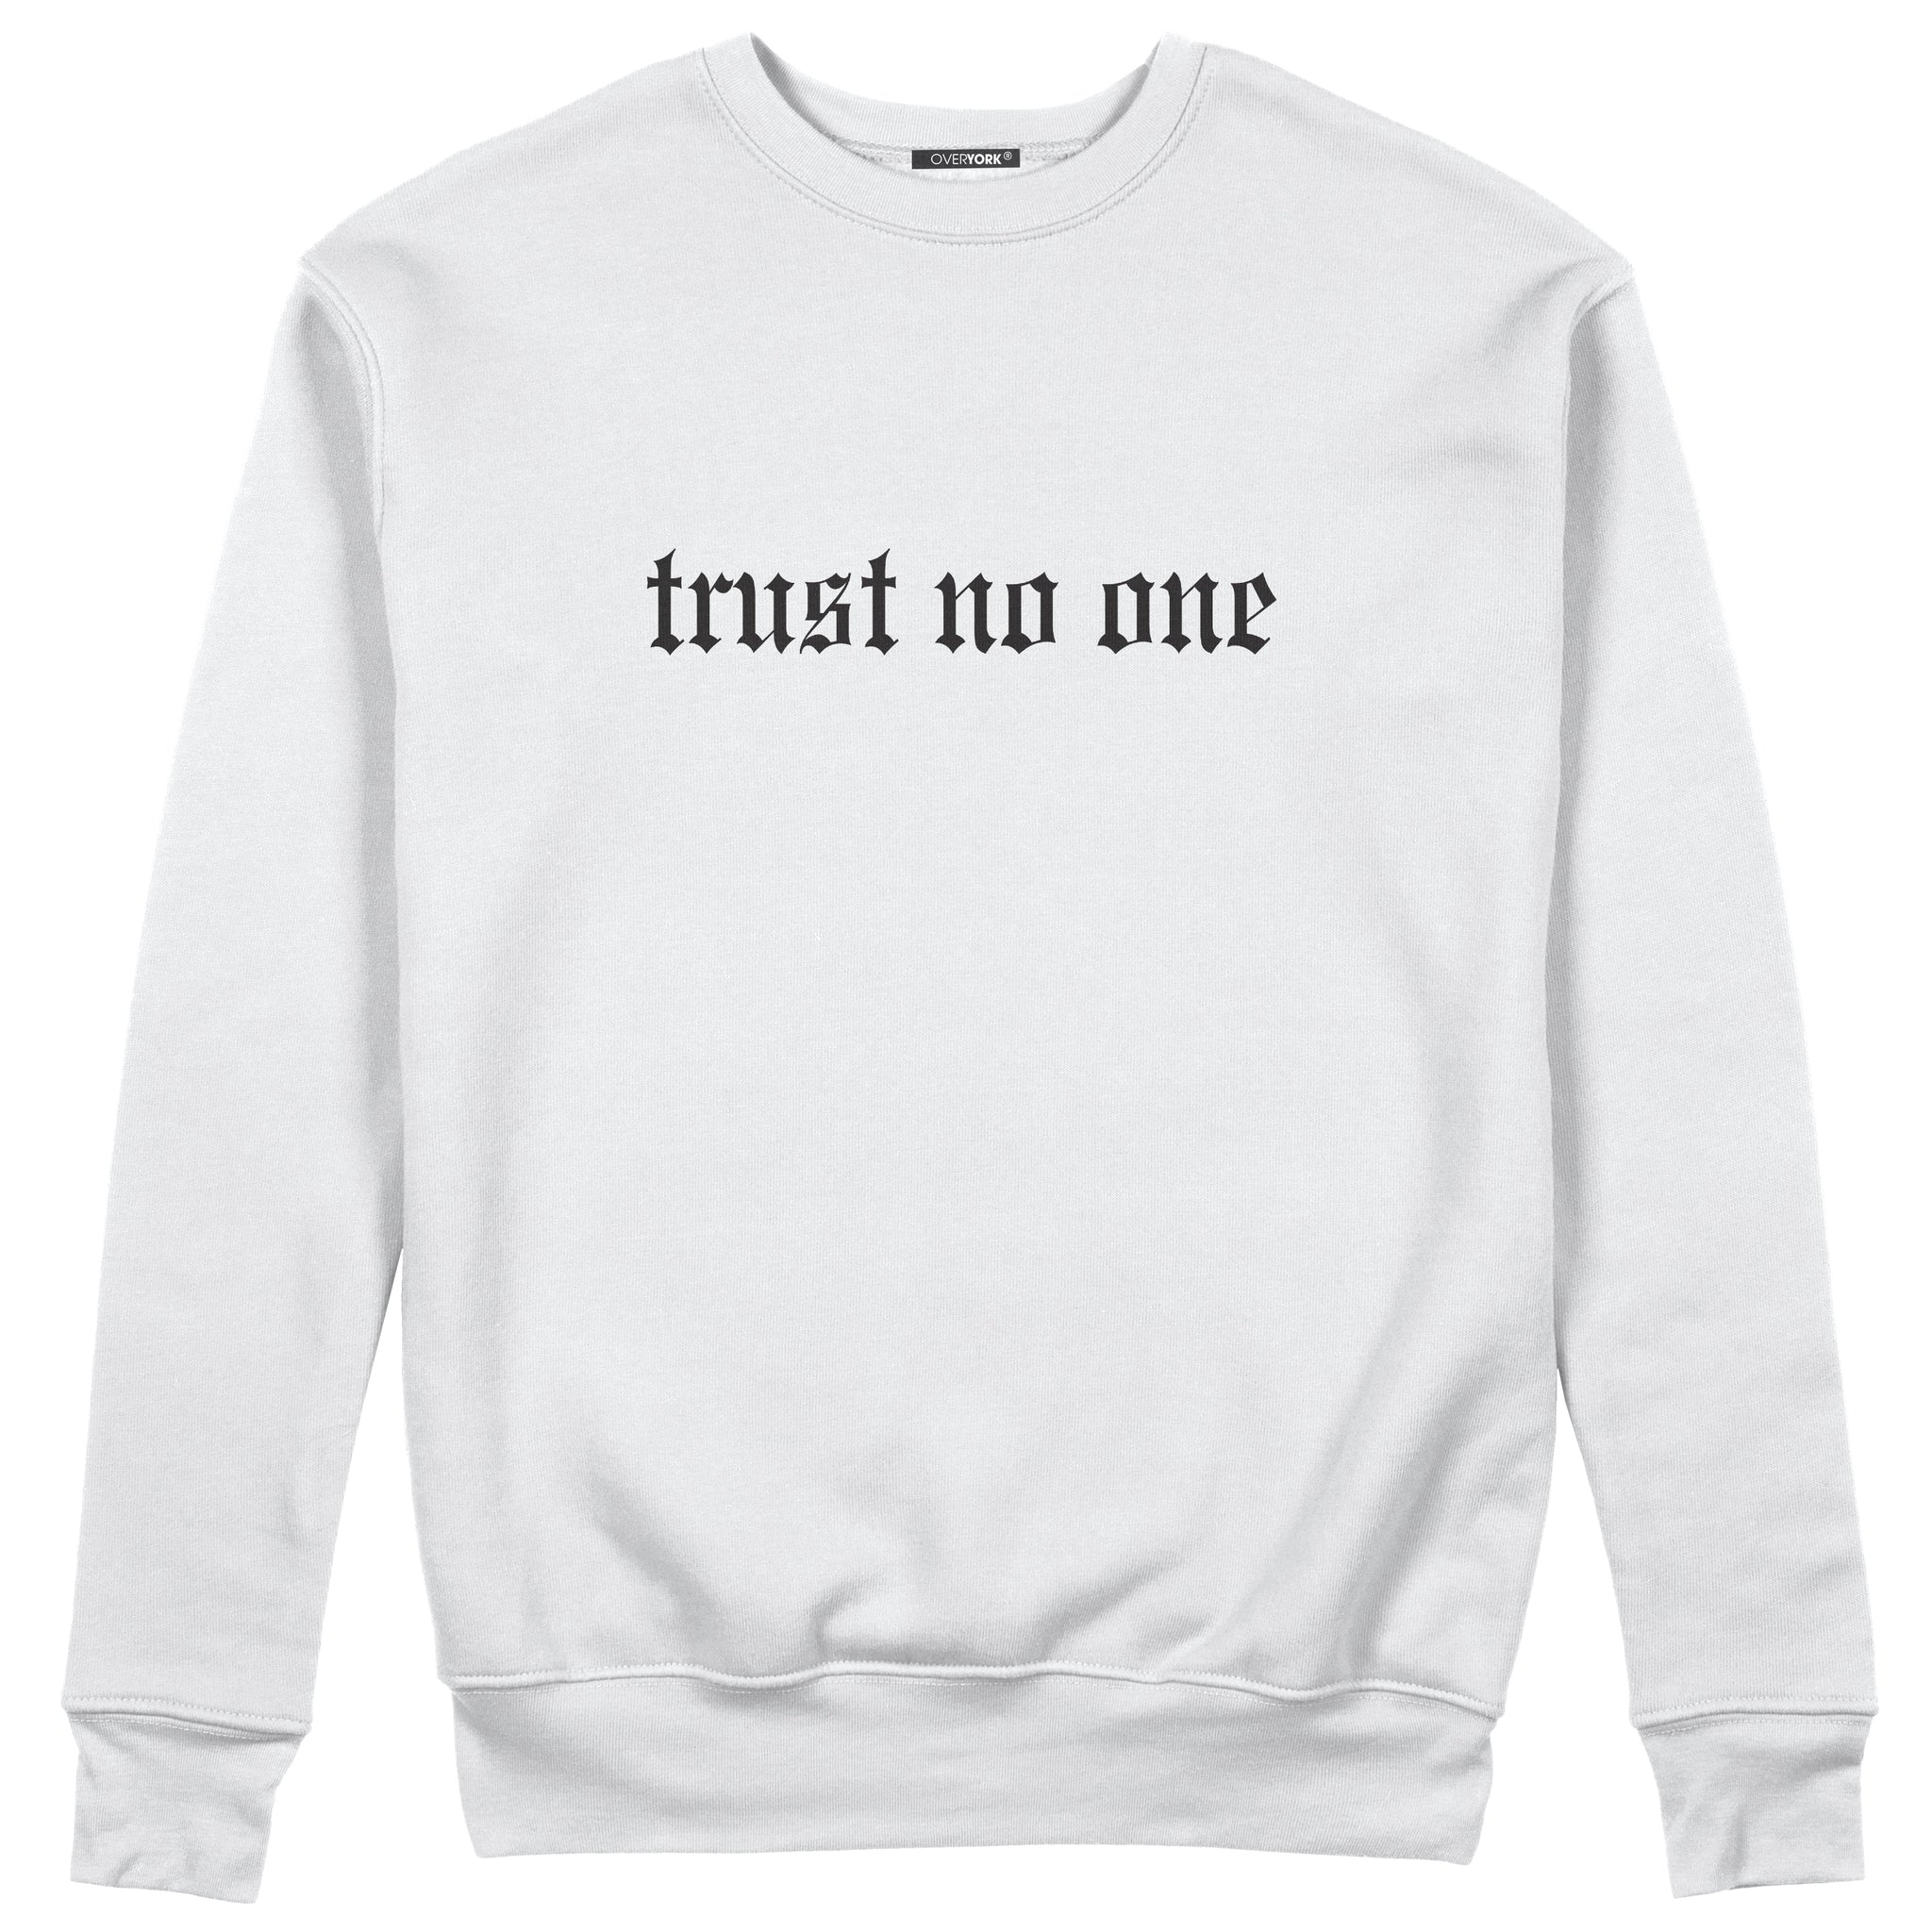 Trust No One - Sweatshirt